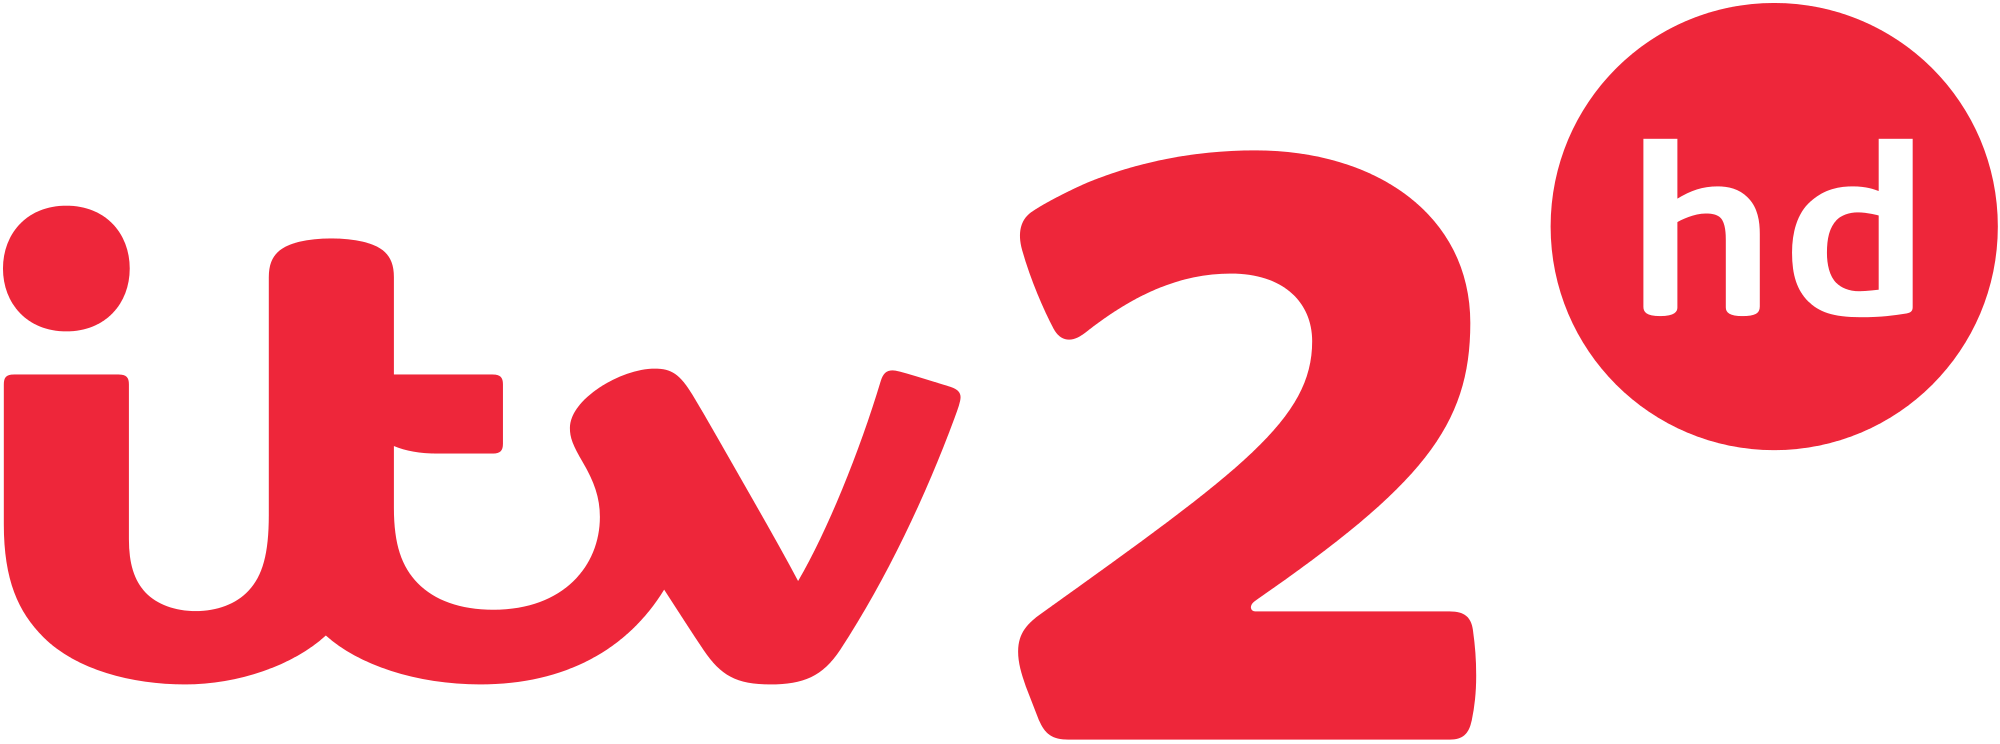 ITV2 logo 2015.png - Itv2 Hd 